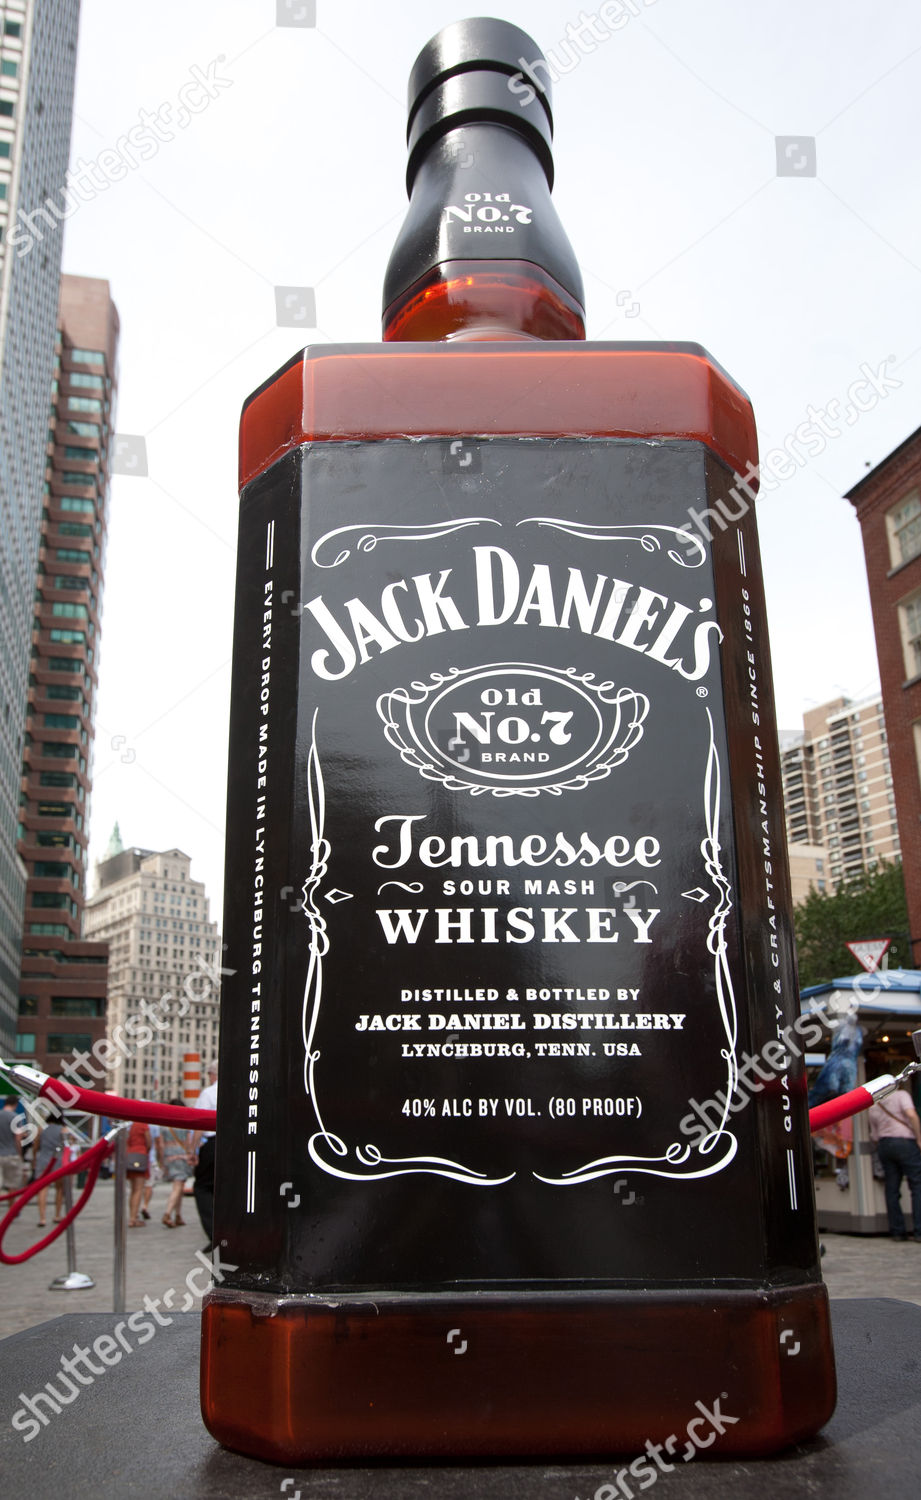 Biggest jack daniels bottle